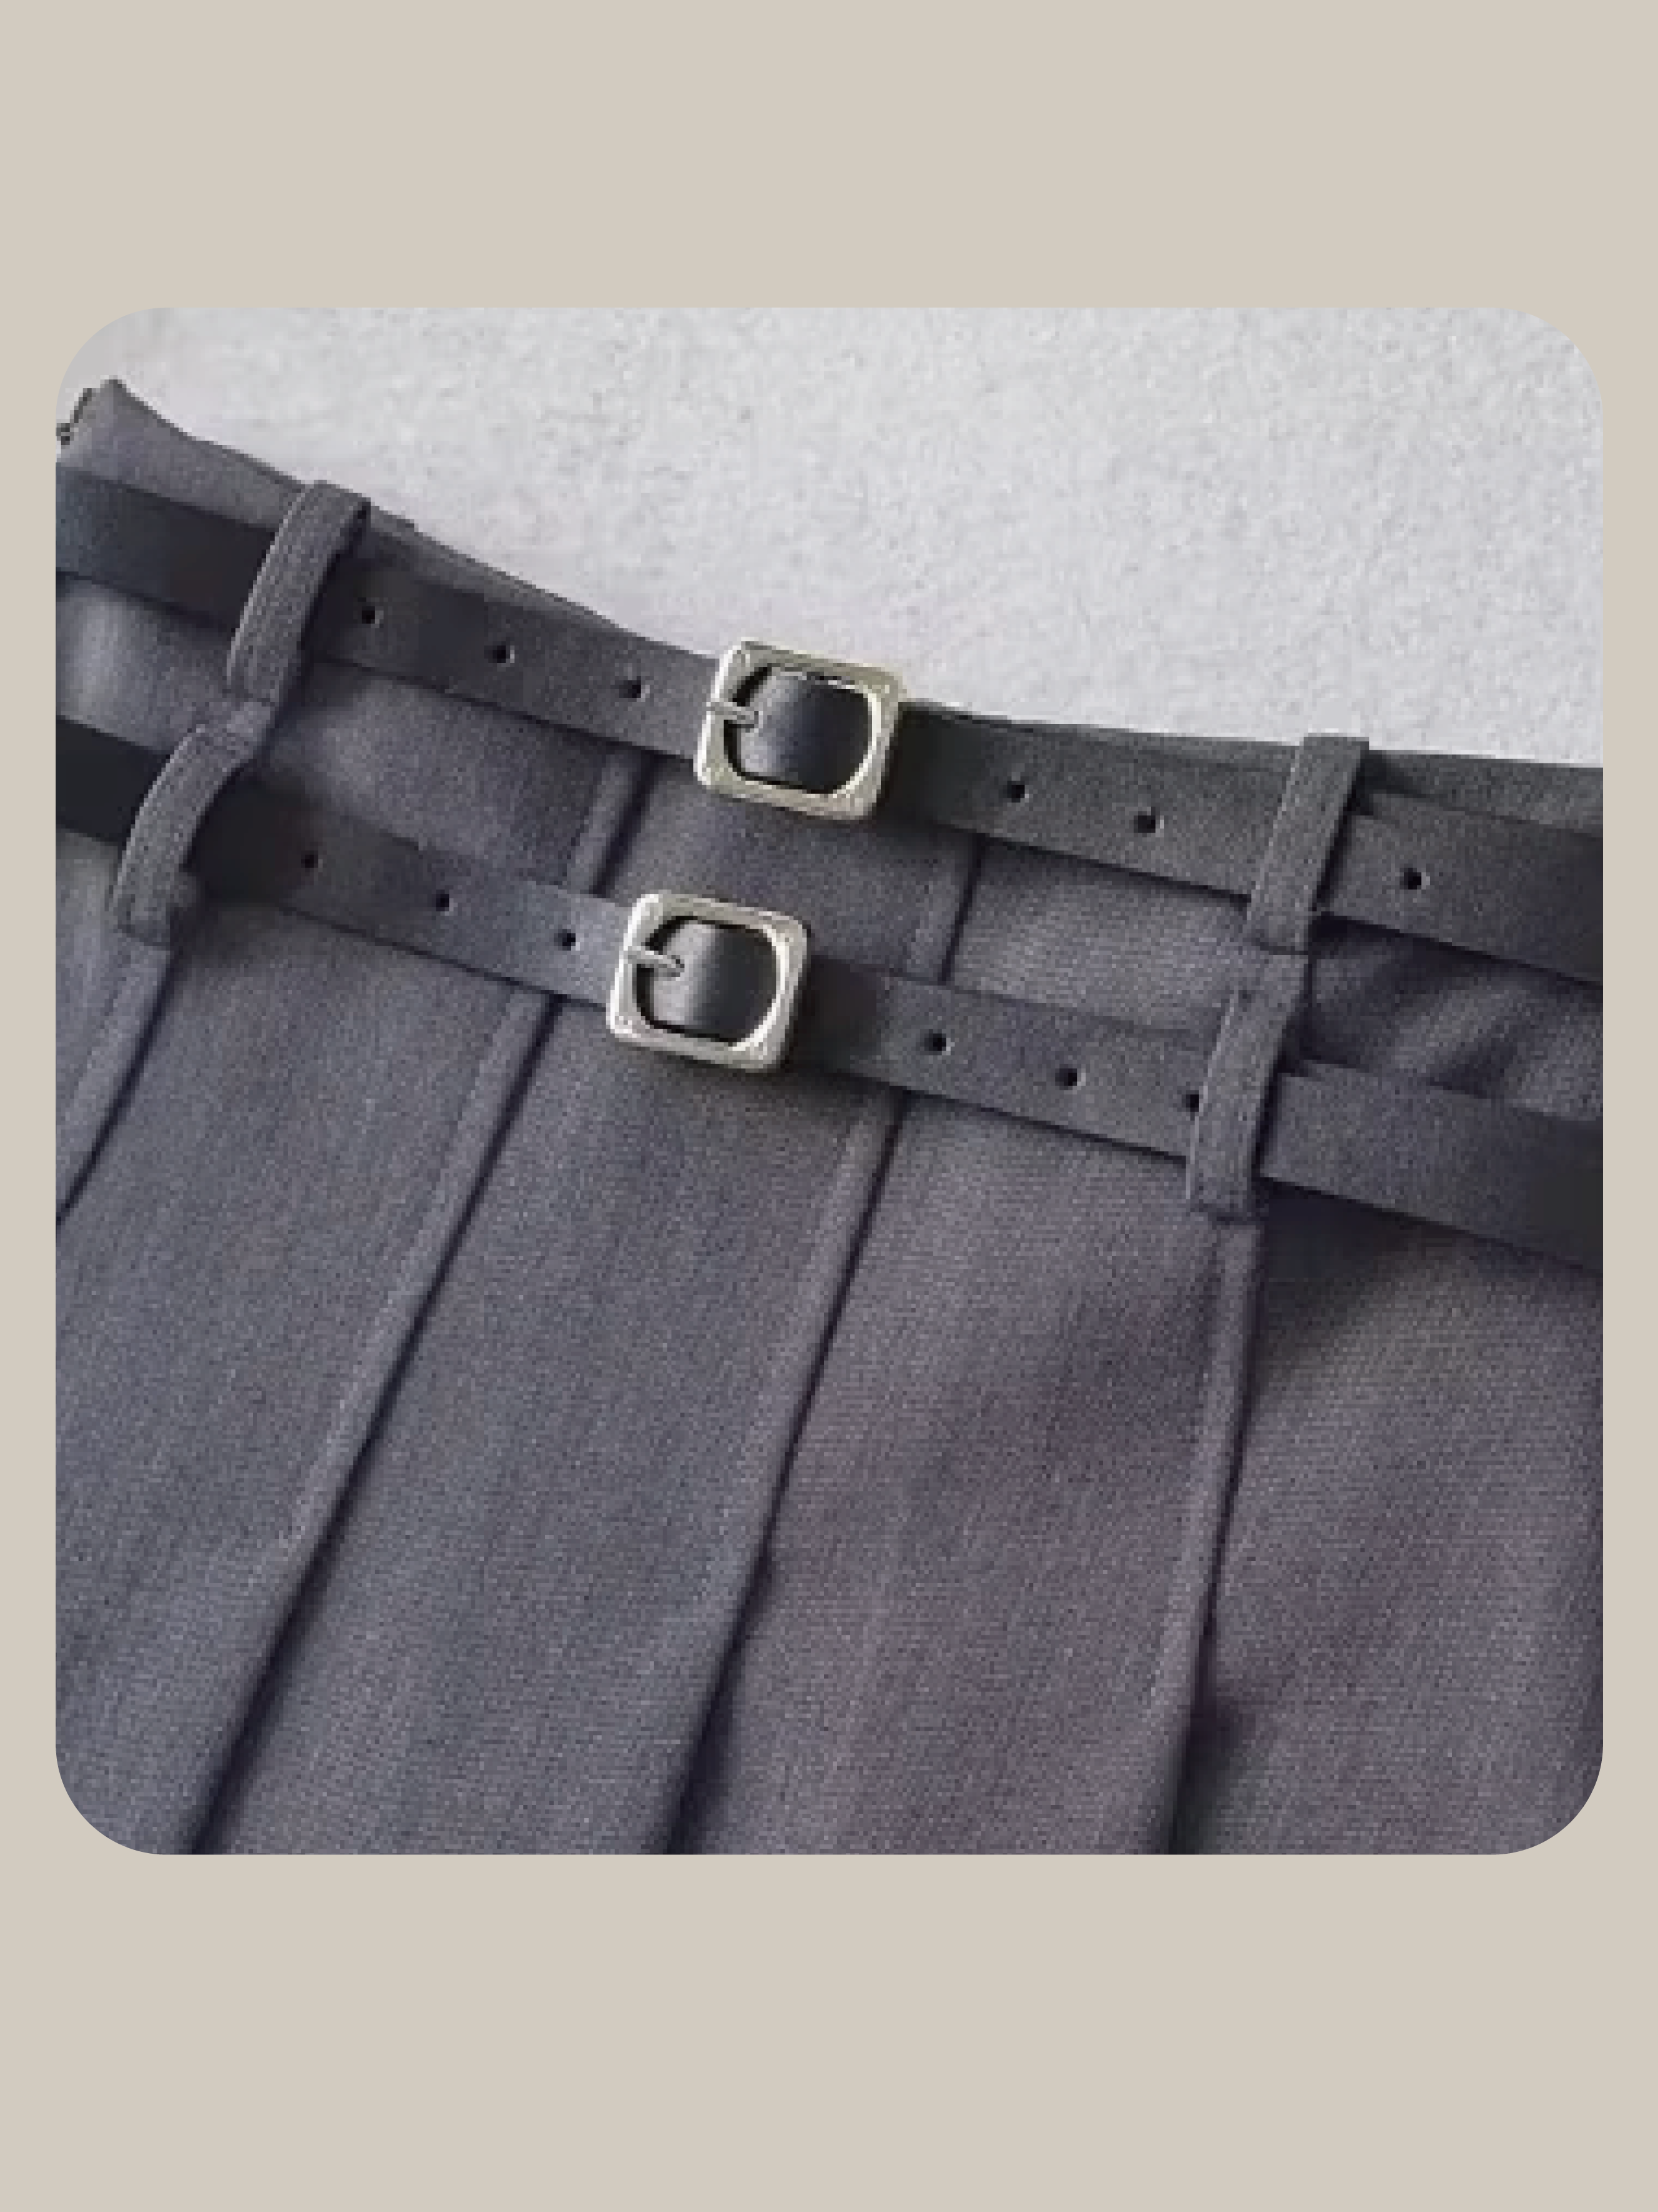 Double Belt Pleats Skirt ダブルベルトプリーツスカート